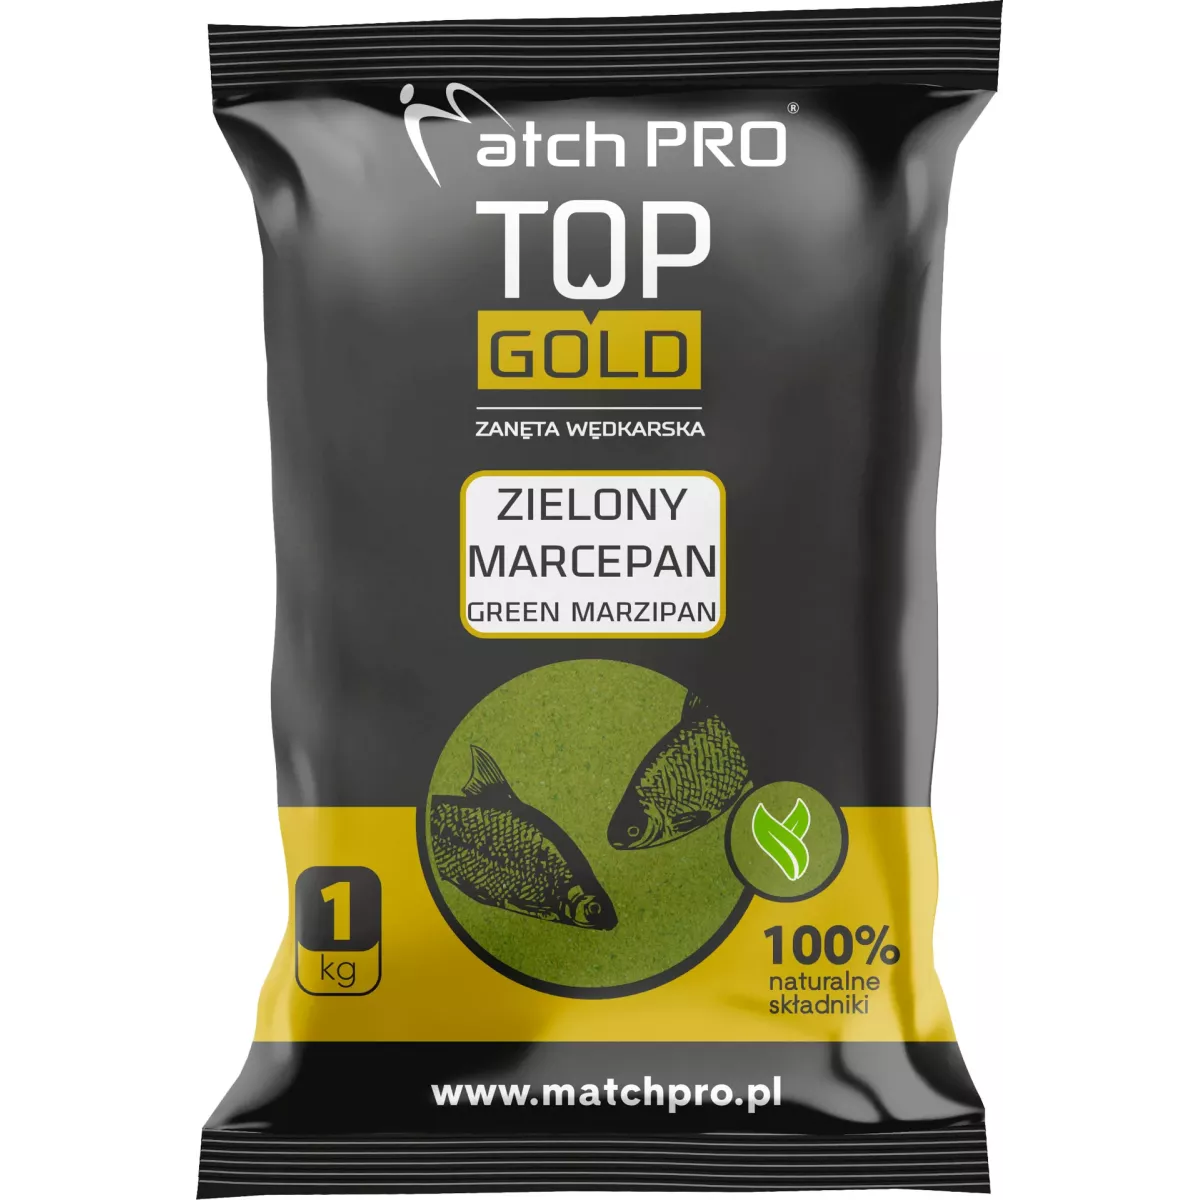 Zanęta MatchPro Top Gold 1kg - ZIELONY MARCEPAN